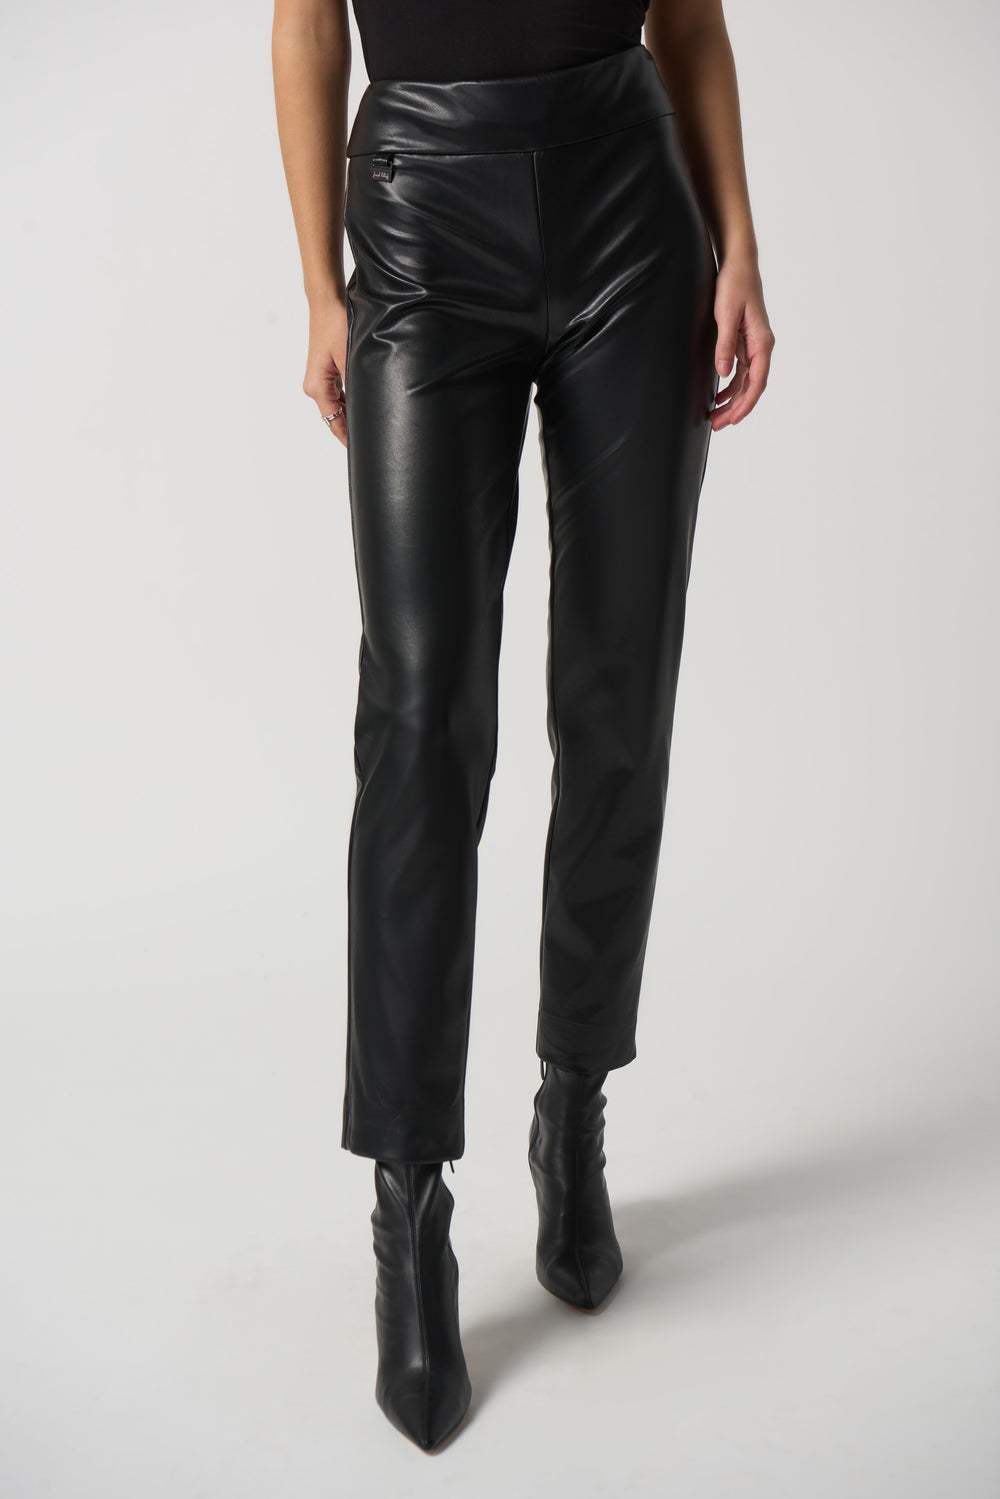 Joseph Ribkoff Leatherette Pant Style 223196 - Black